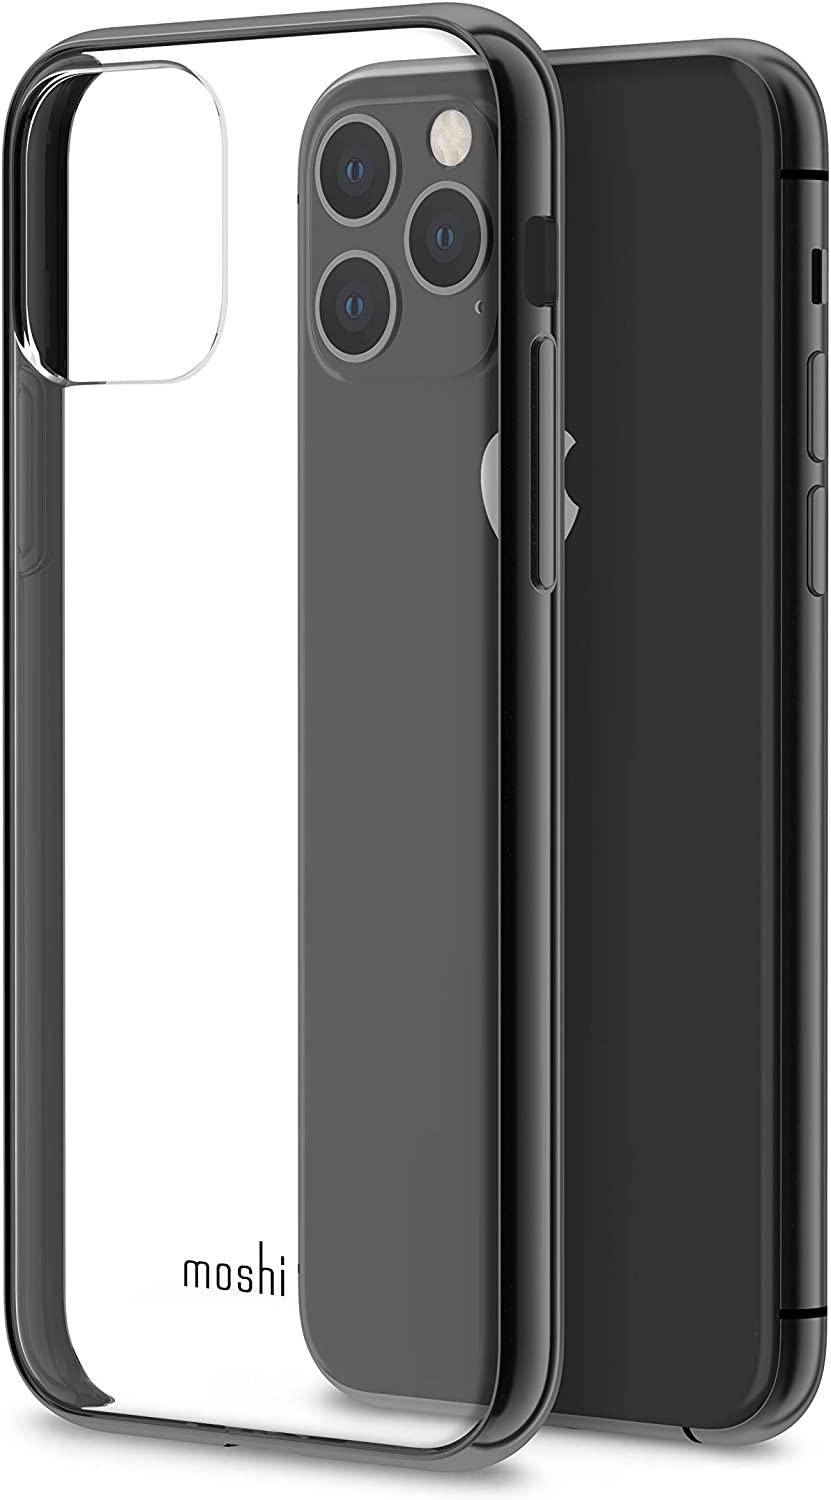 كفر ايفون - أسود Moshi - iPhone 11 Pro Case (Vitros Raven Black) - cG9zdDo1NzU4Ng==